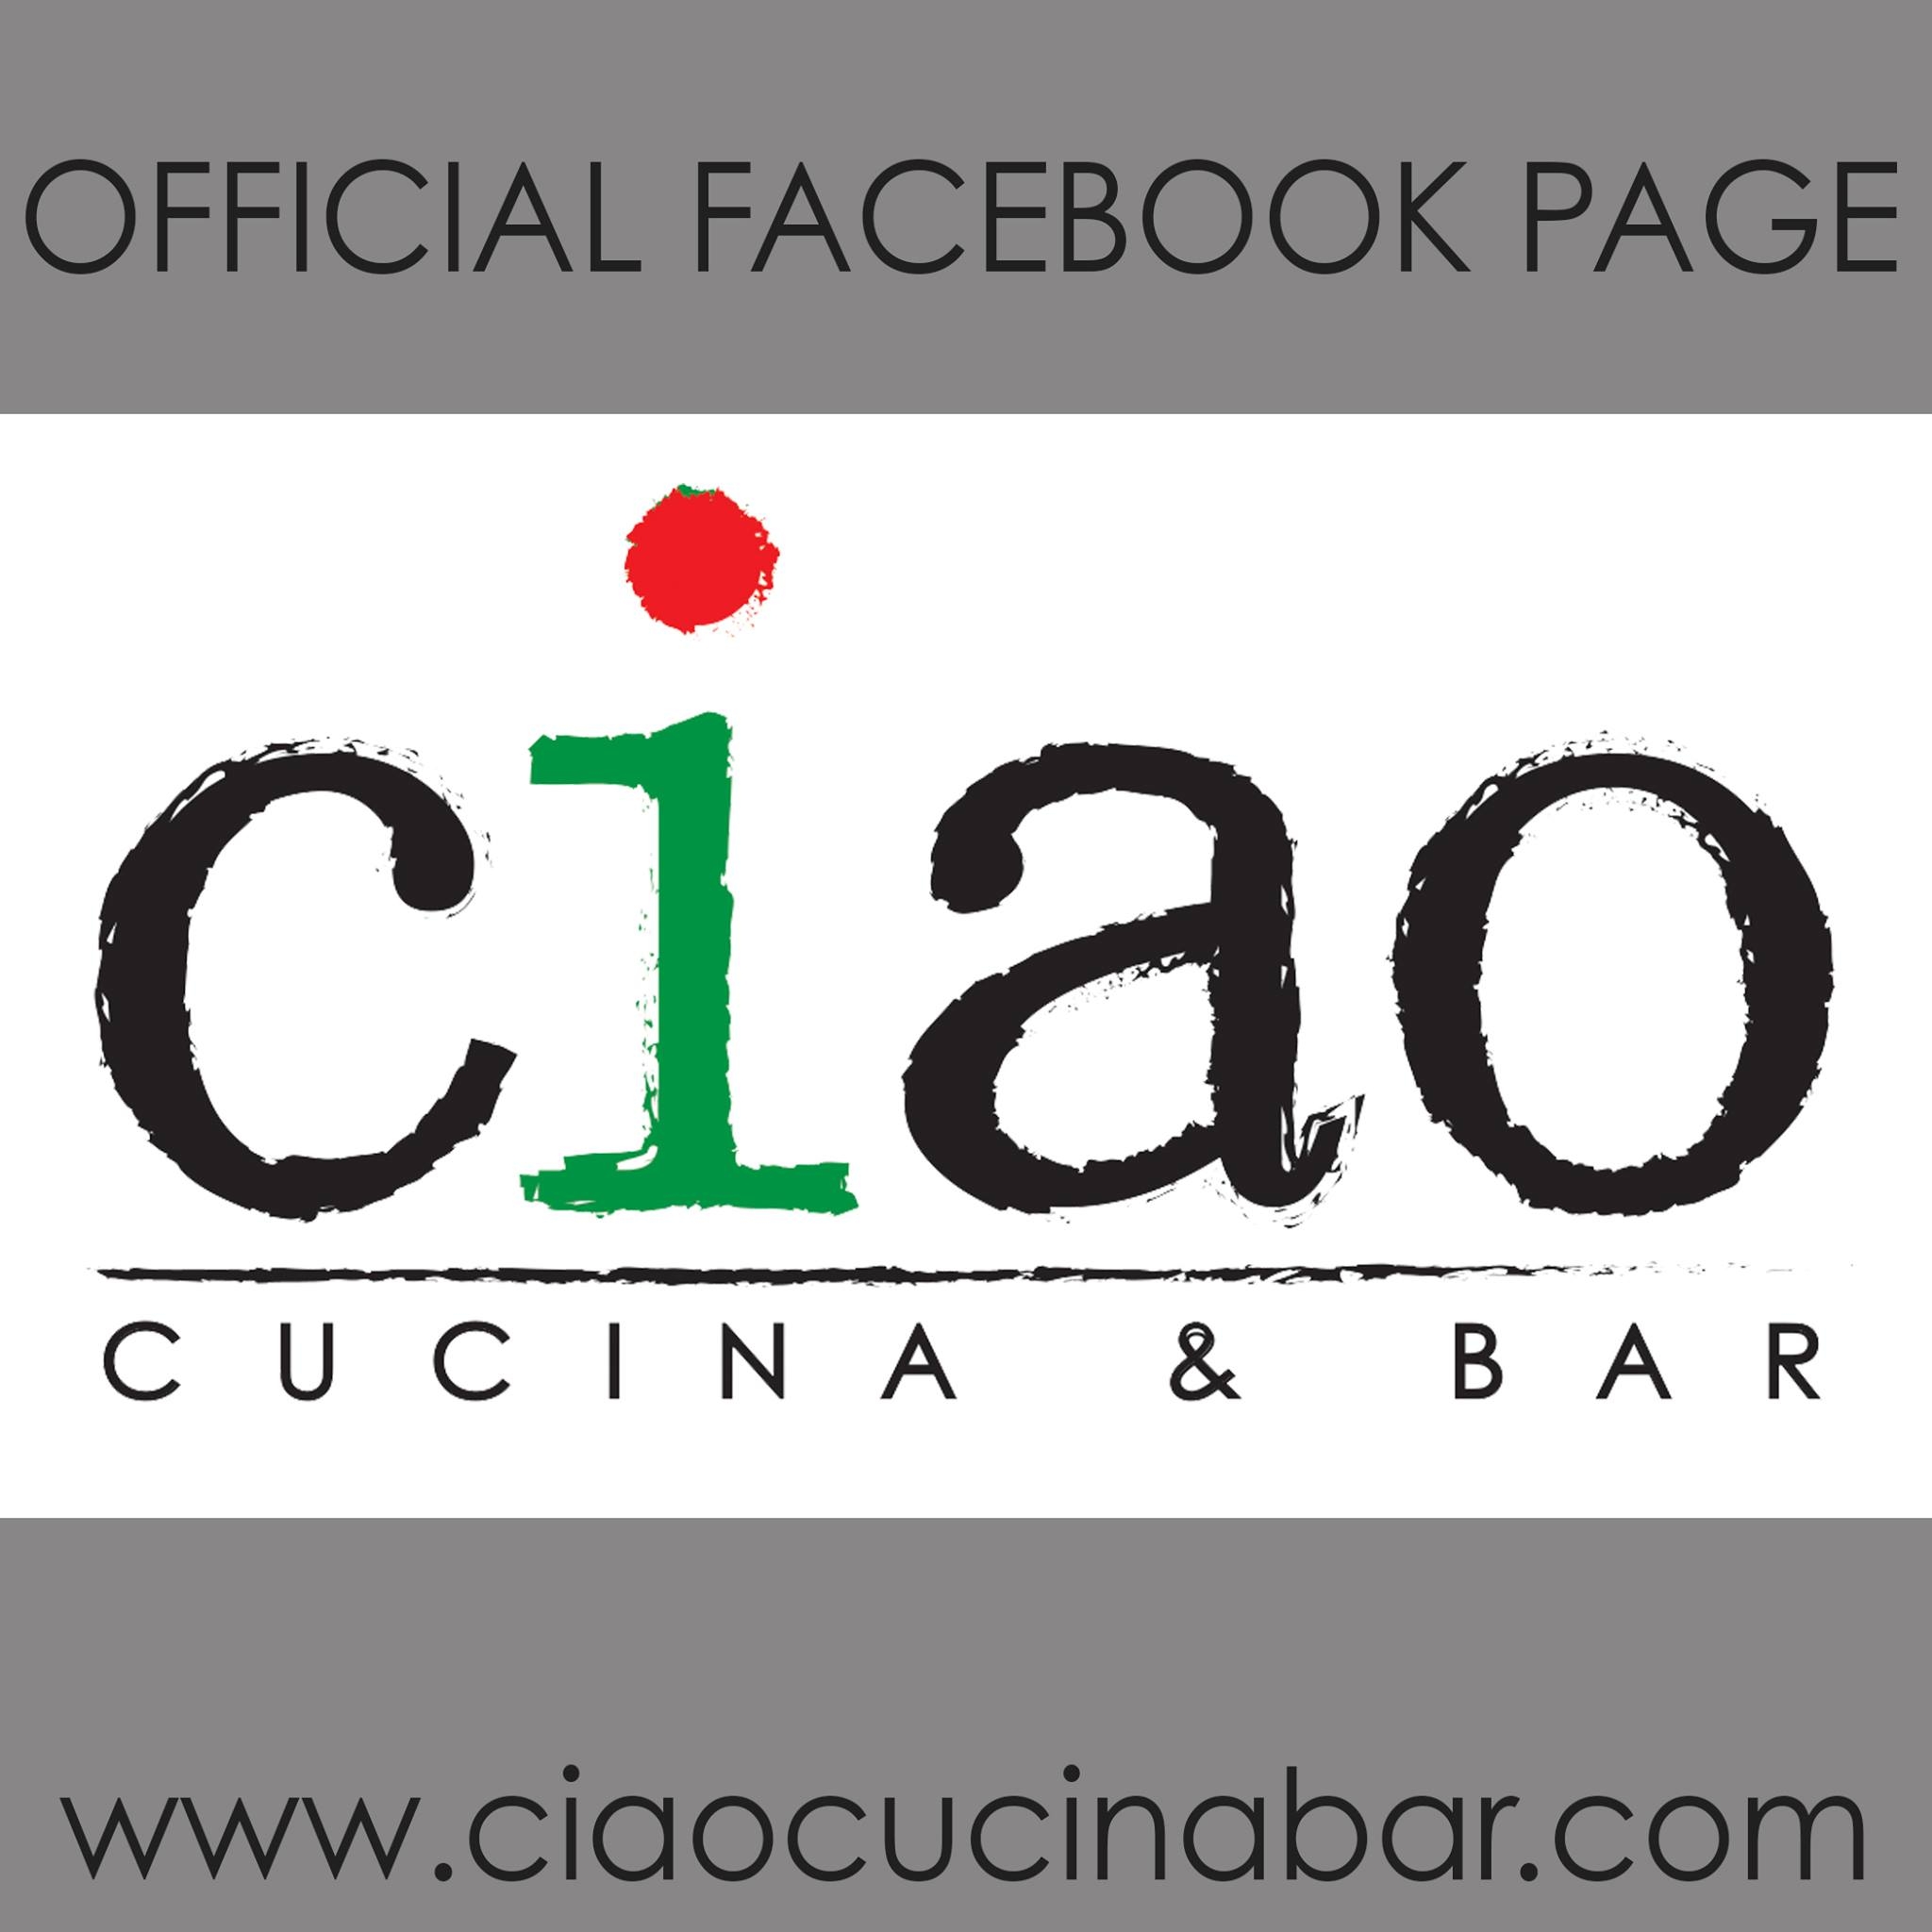 Ciao Cucina & Bar